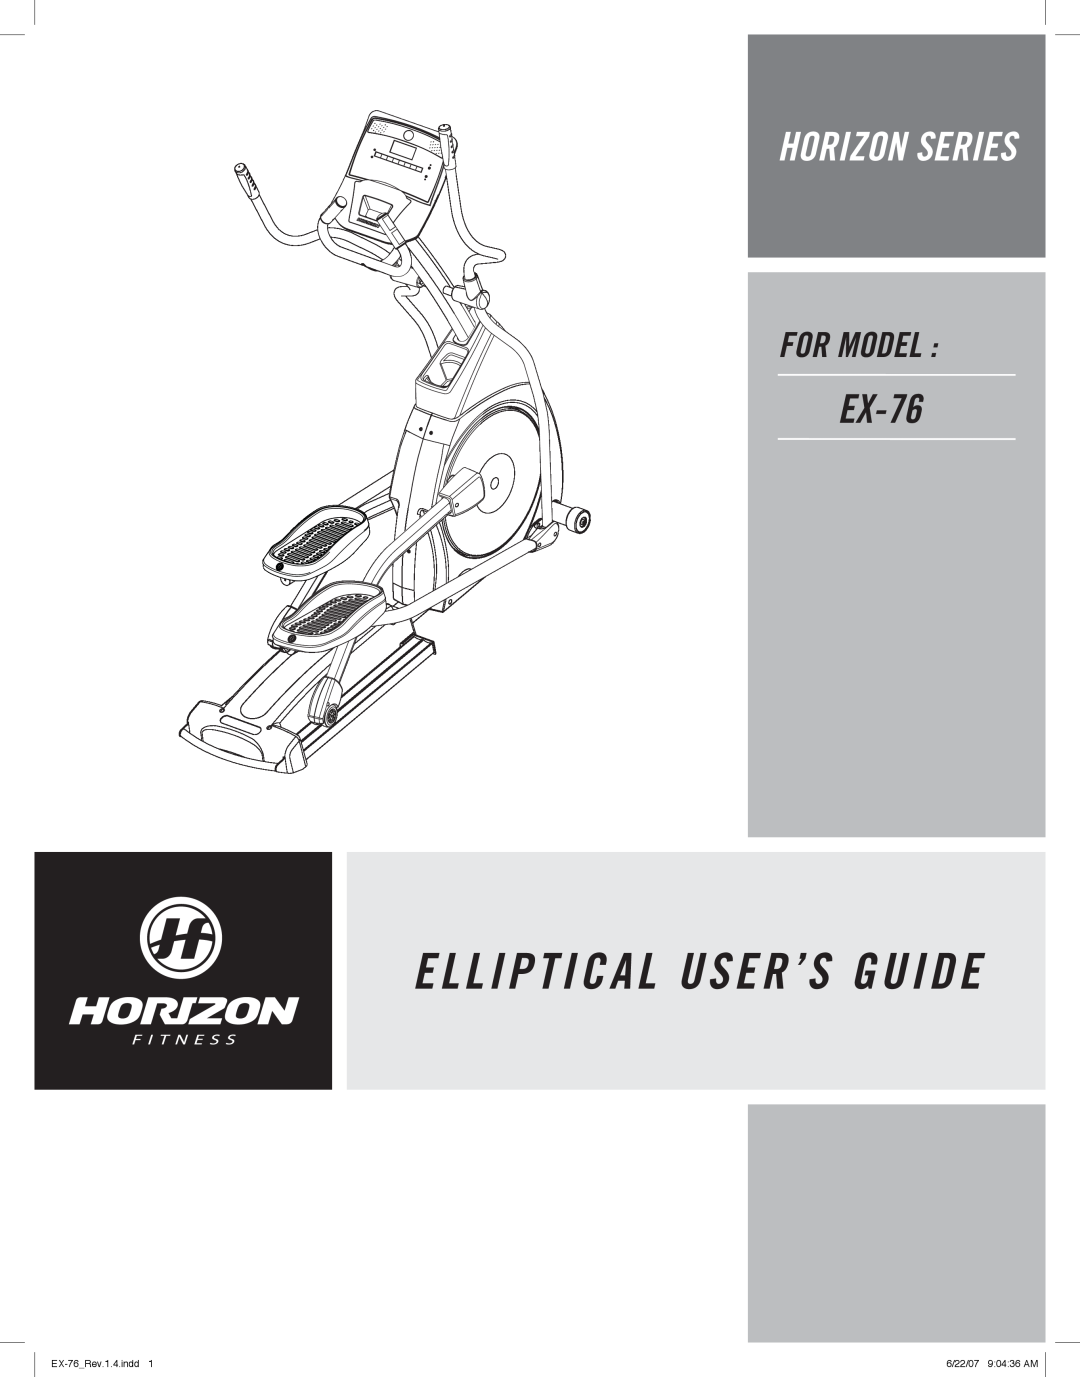 Horizon Fitness manual Elliptical User’S Guide, Horizon Series, For Model, EX-76Rev.1.4.indd, 6/22/07 90436 AM 